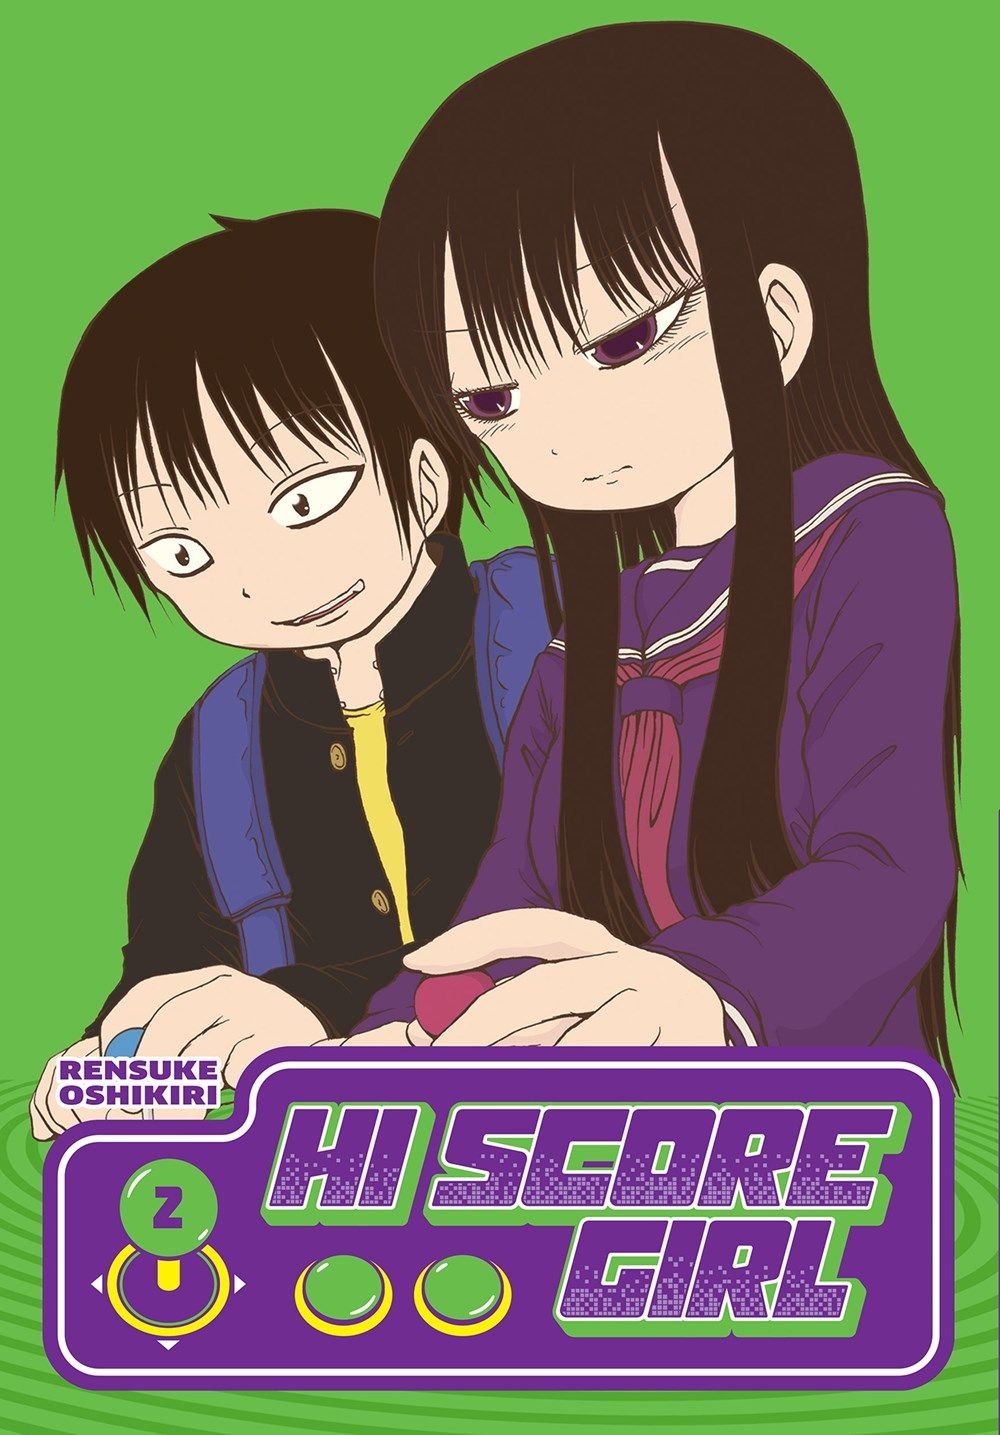 Games Brought Us Closer Together | Hi Score Girl | Netflix Anime - YouTube